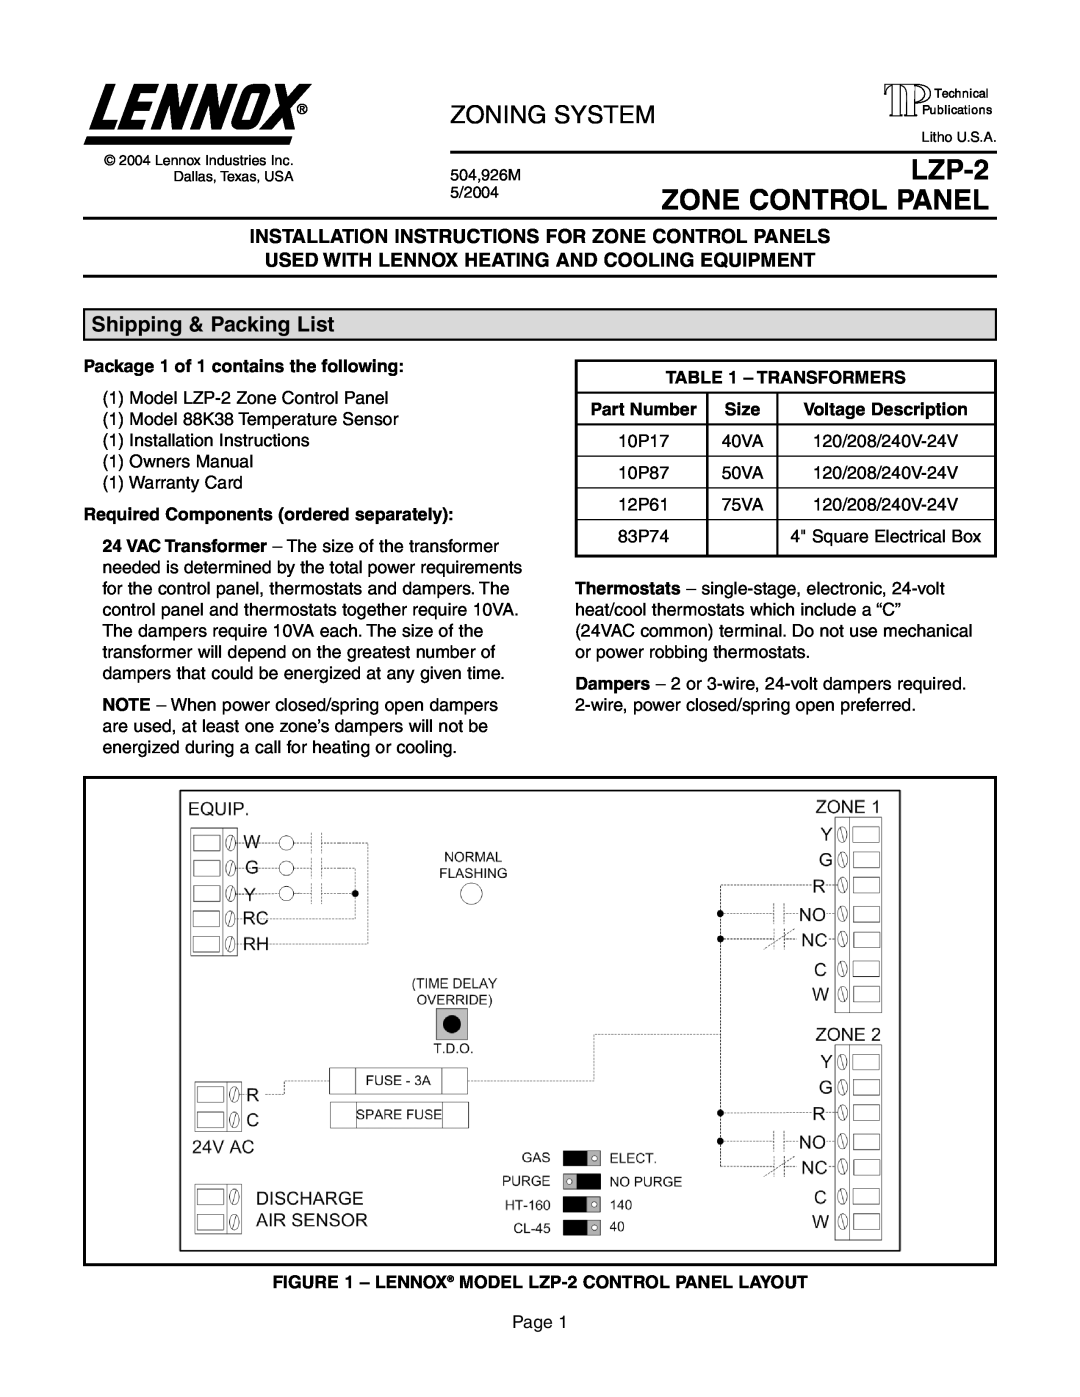 Lennox International Inc Zone Control Panel installation instructions Shipping & Packing List, LZP-2, Zoning System 